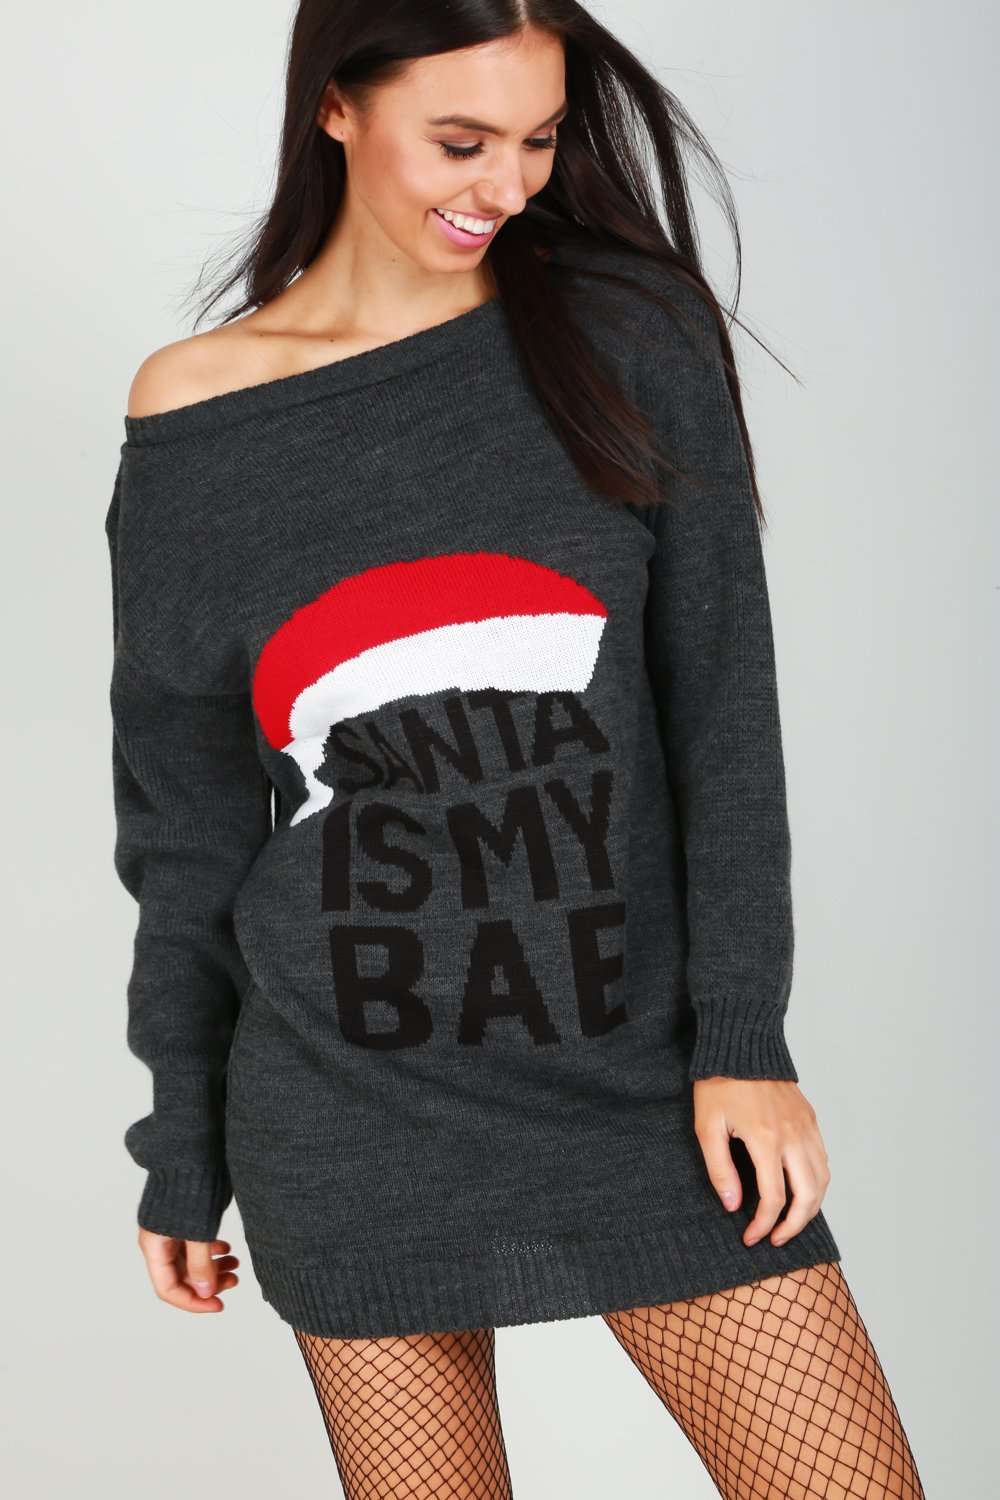 Santa Is My Bae Christmas Jumper Dress - bejealous-com